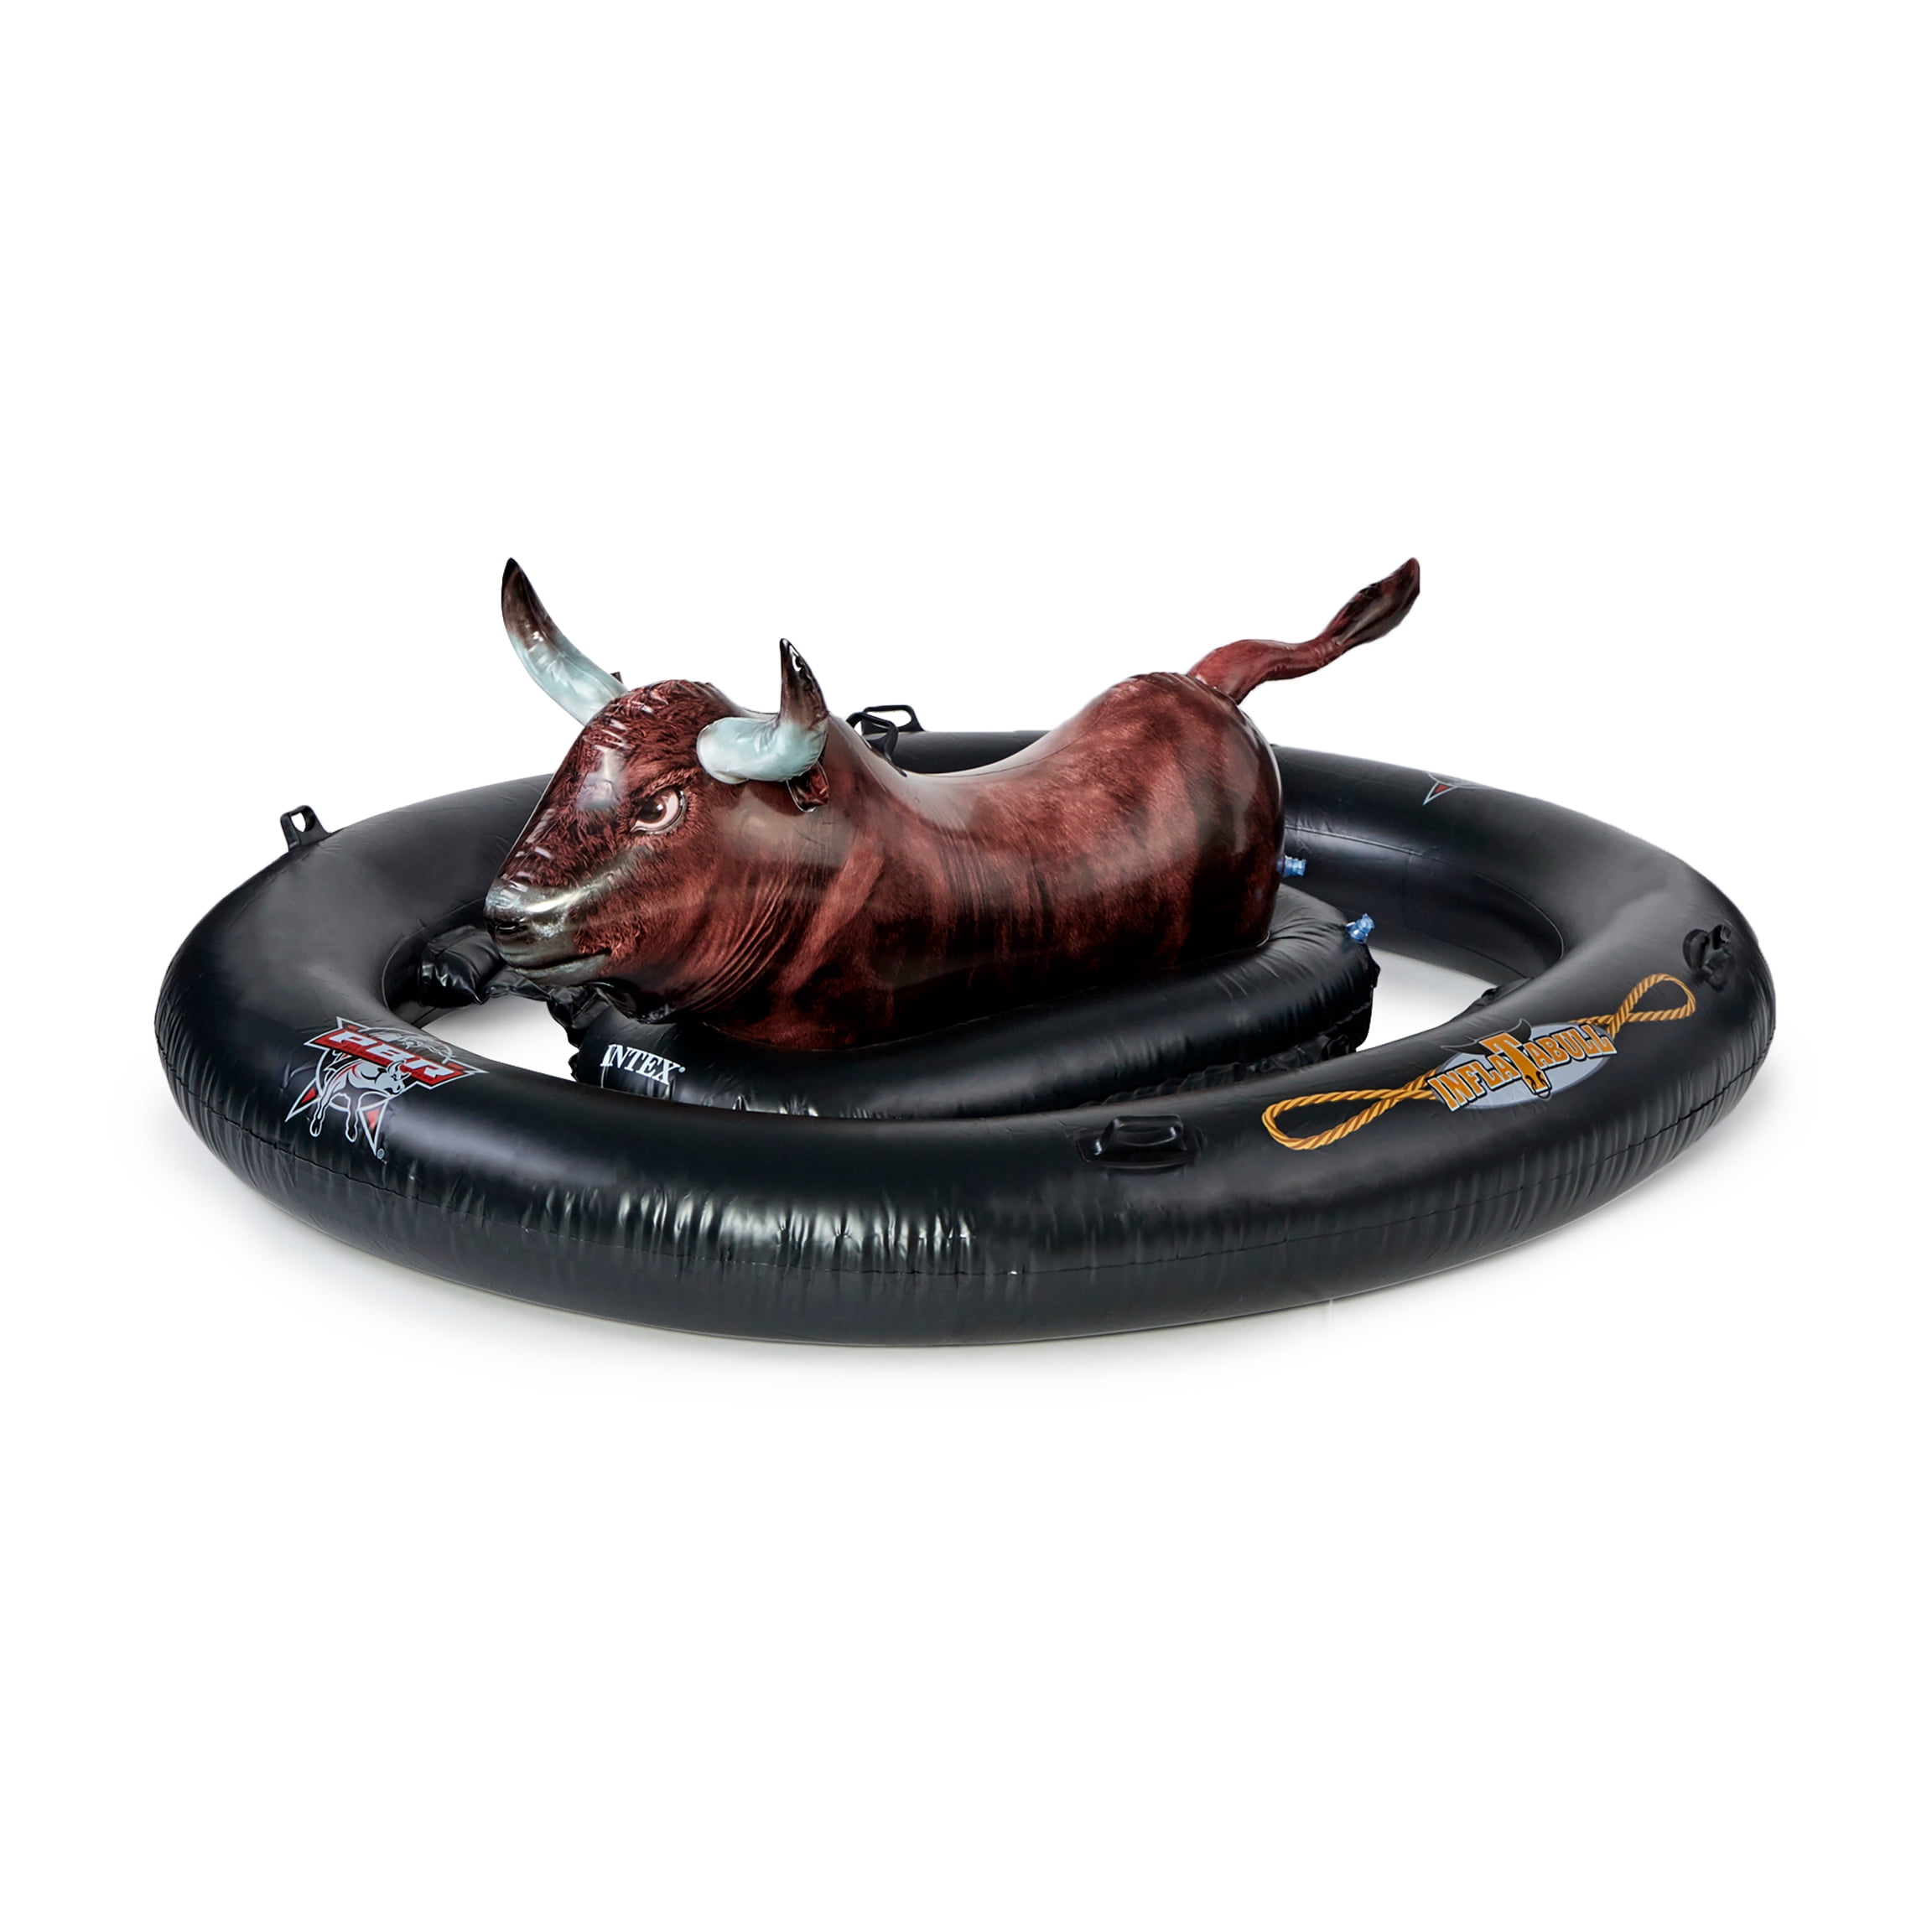 Intex PBR Inflatabull Bull-Riding Giant Inflatable Swimming Pool Lake Fun Float 